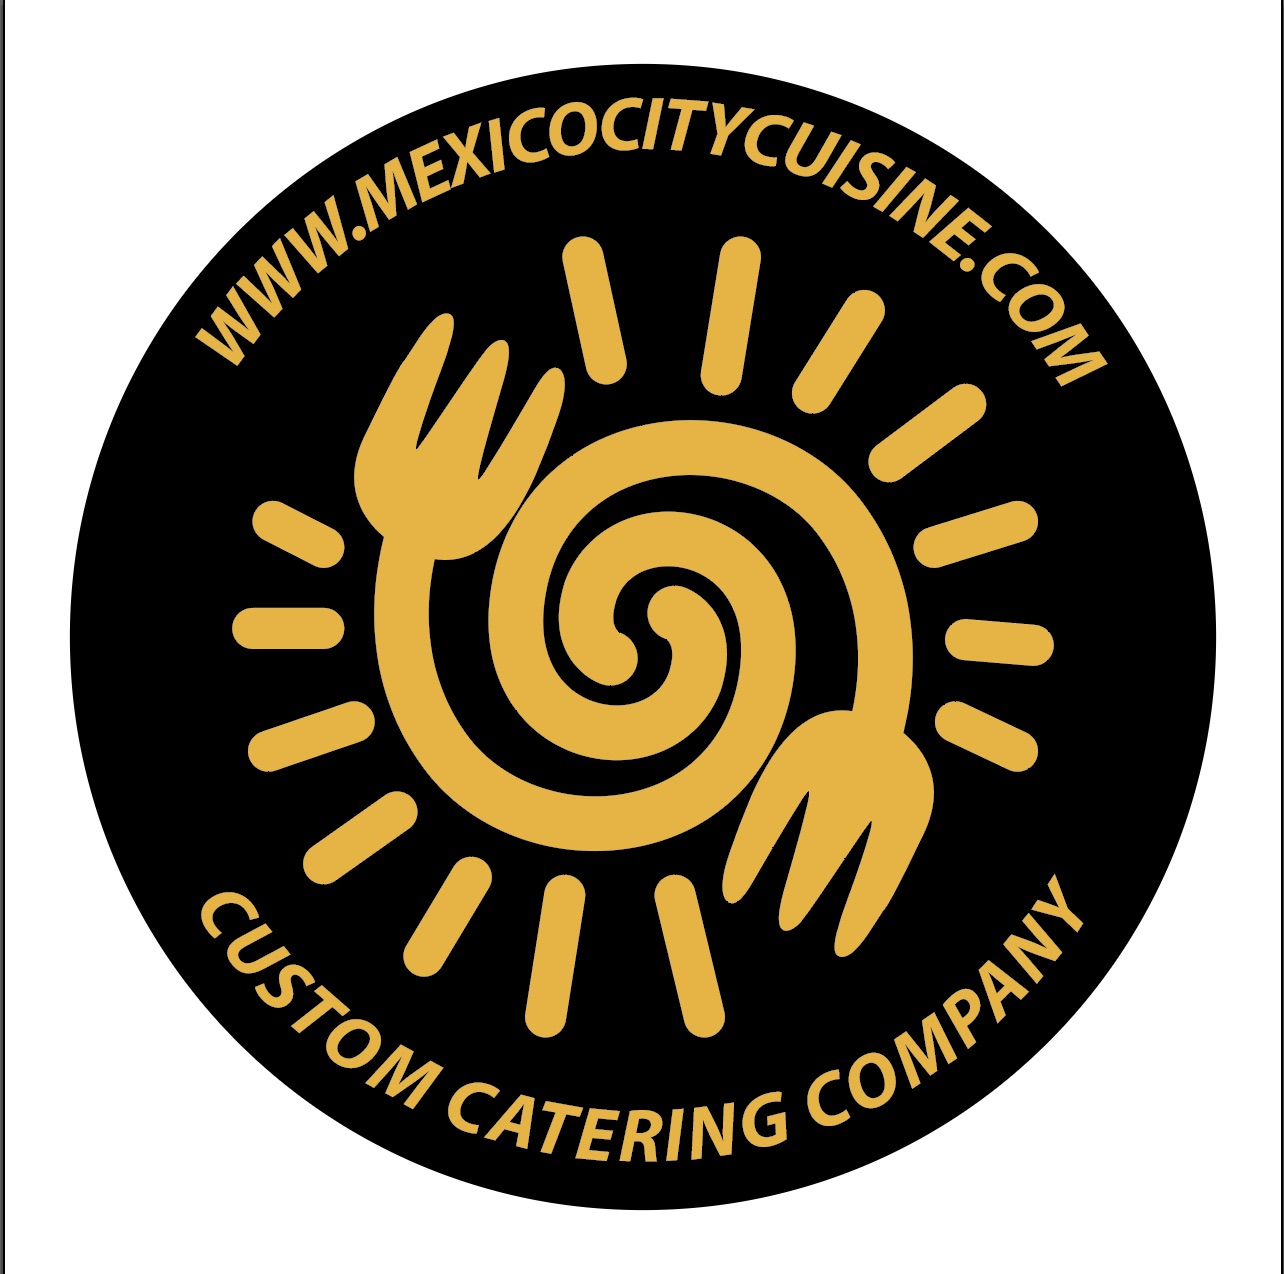 Mexico City cuisine food truck profile image